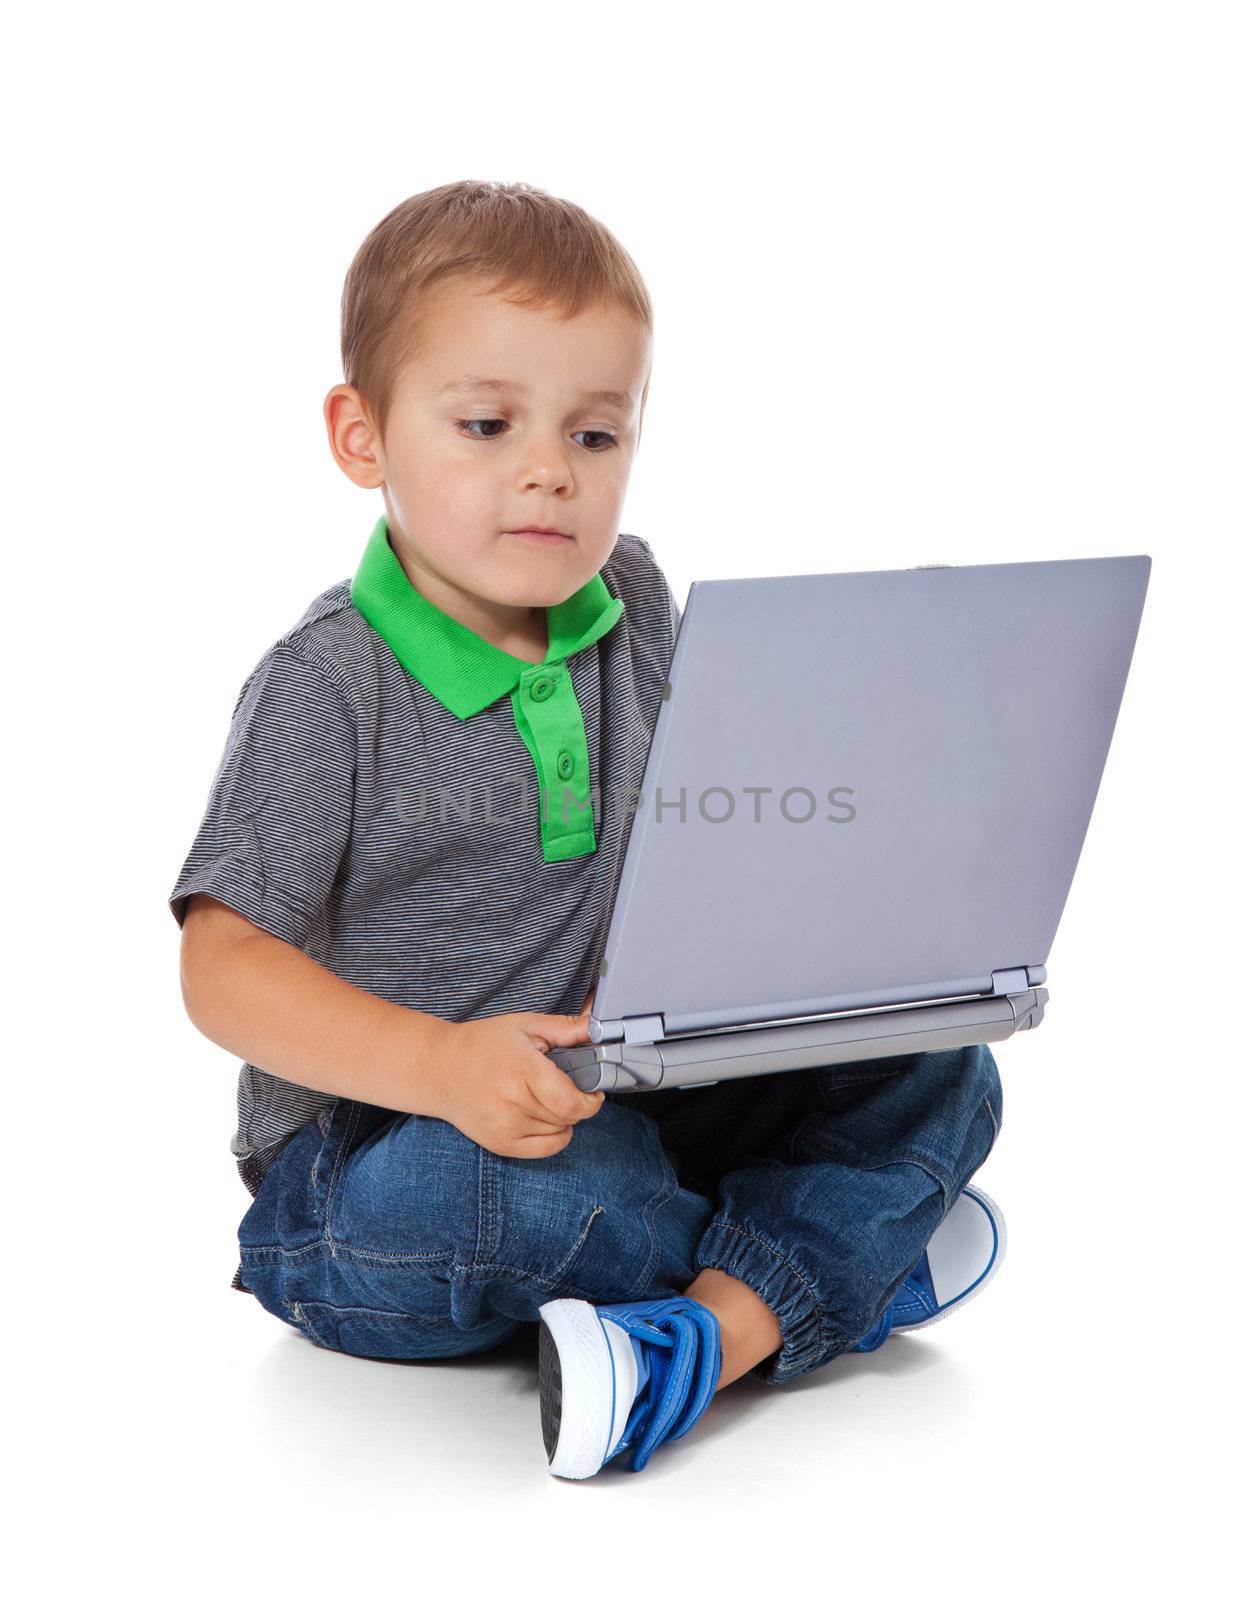 Boy using computer by kaarsten